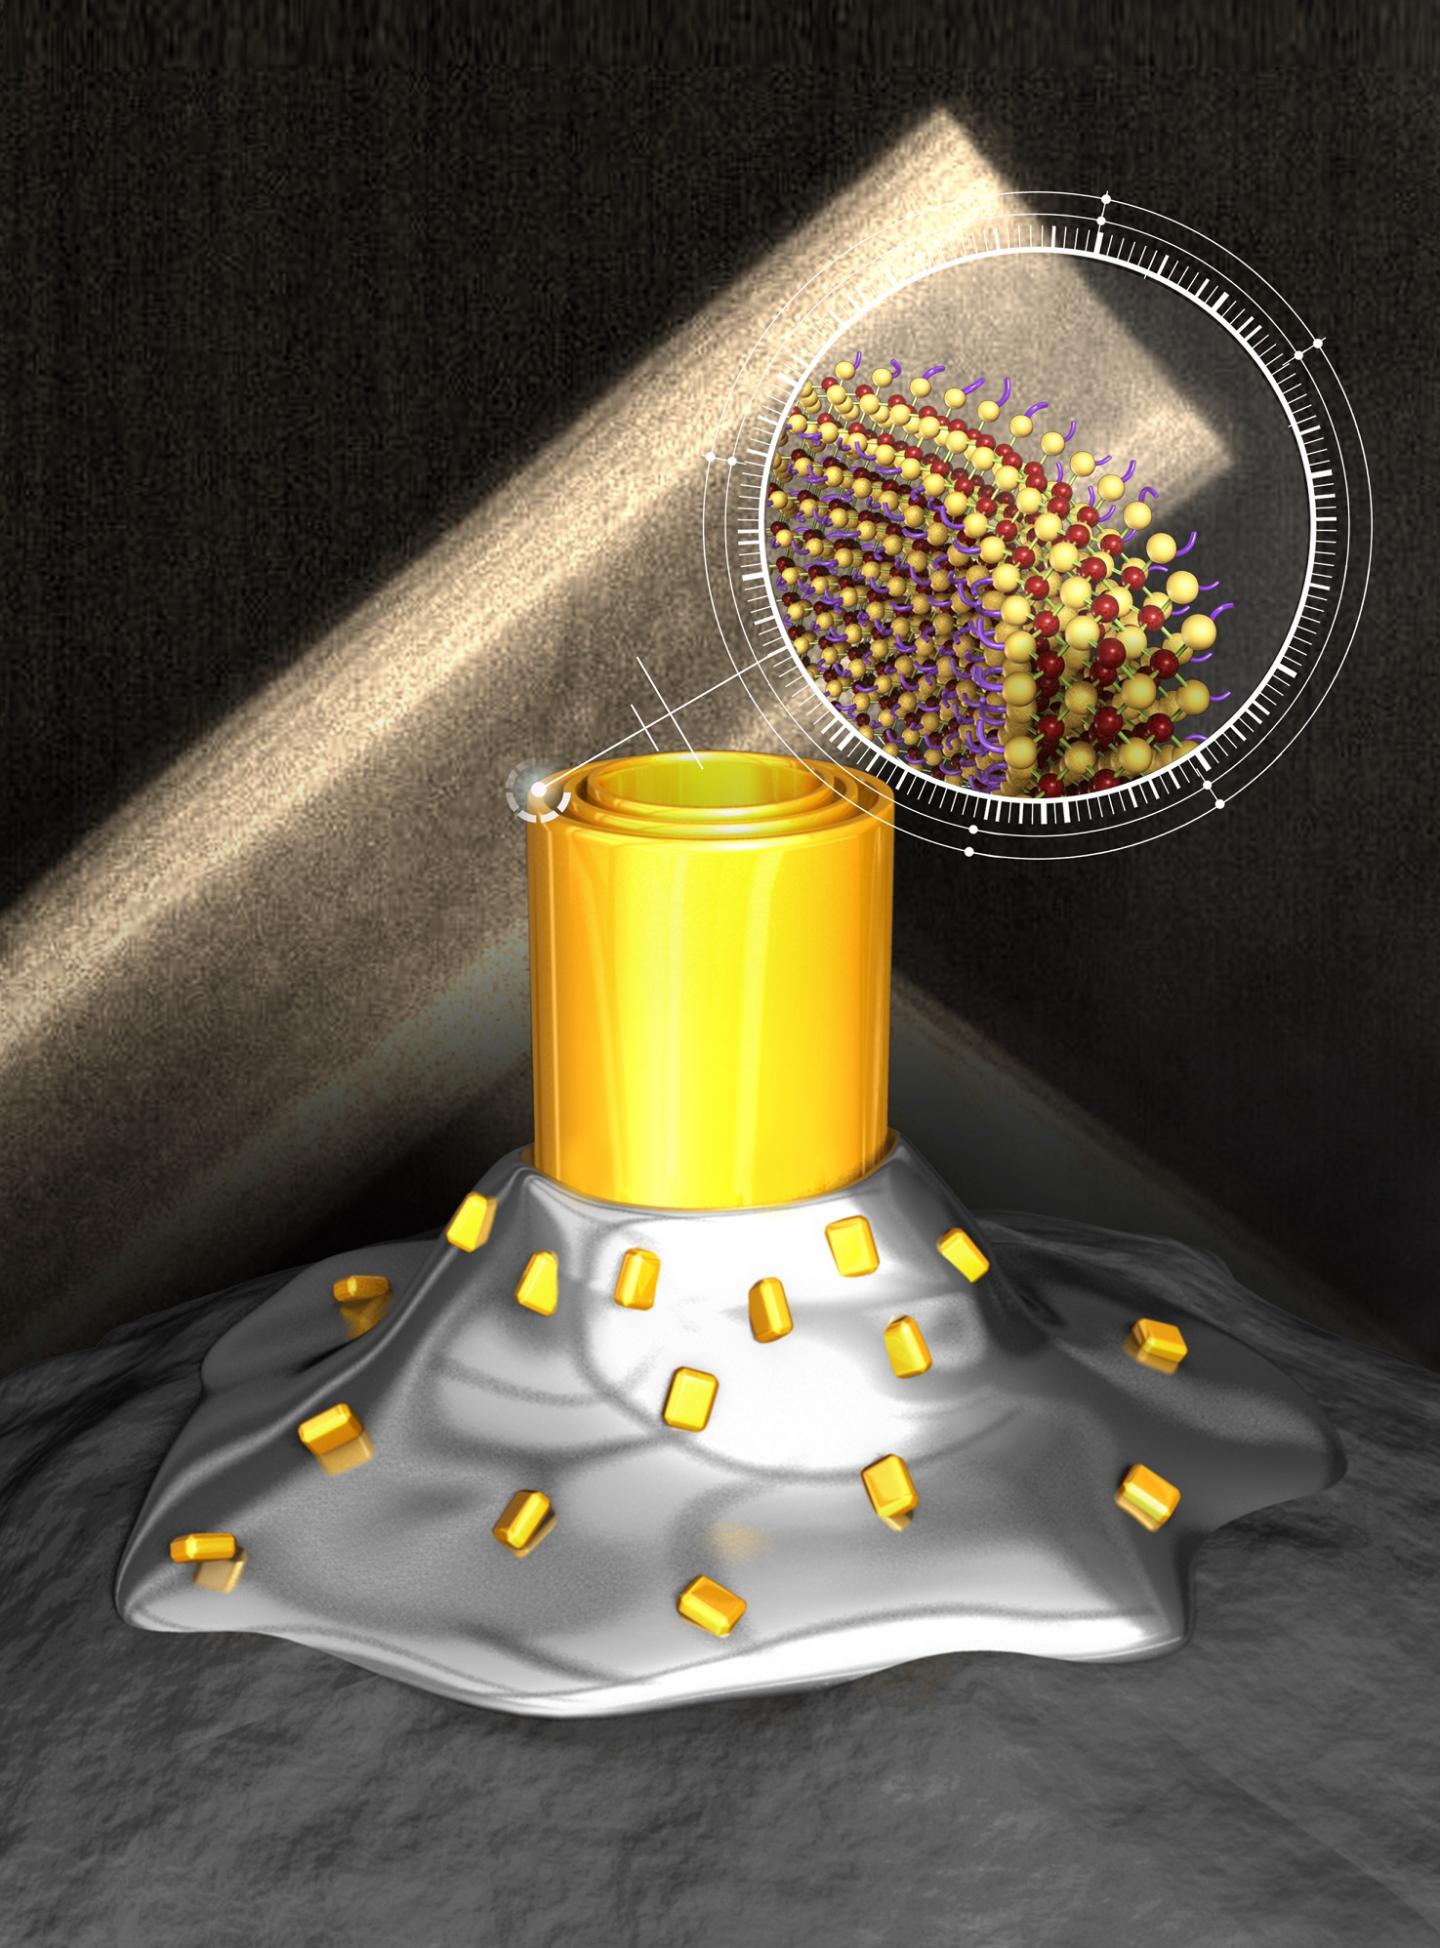 Semiconducting Nanotubes that Form Spontaneously